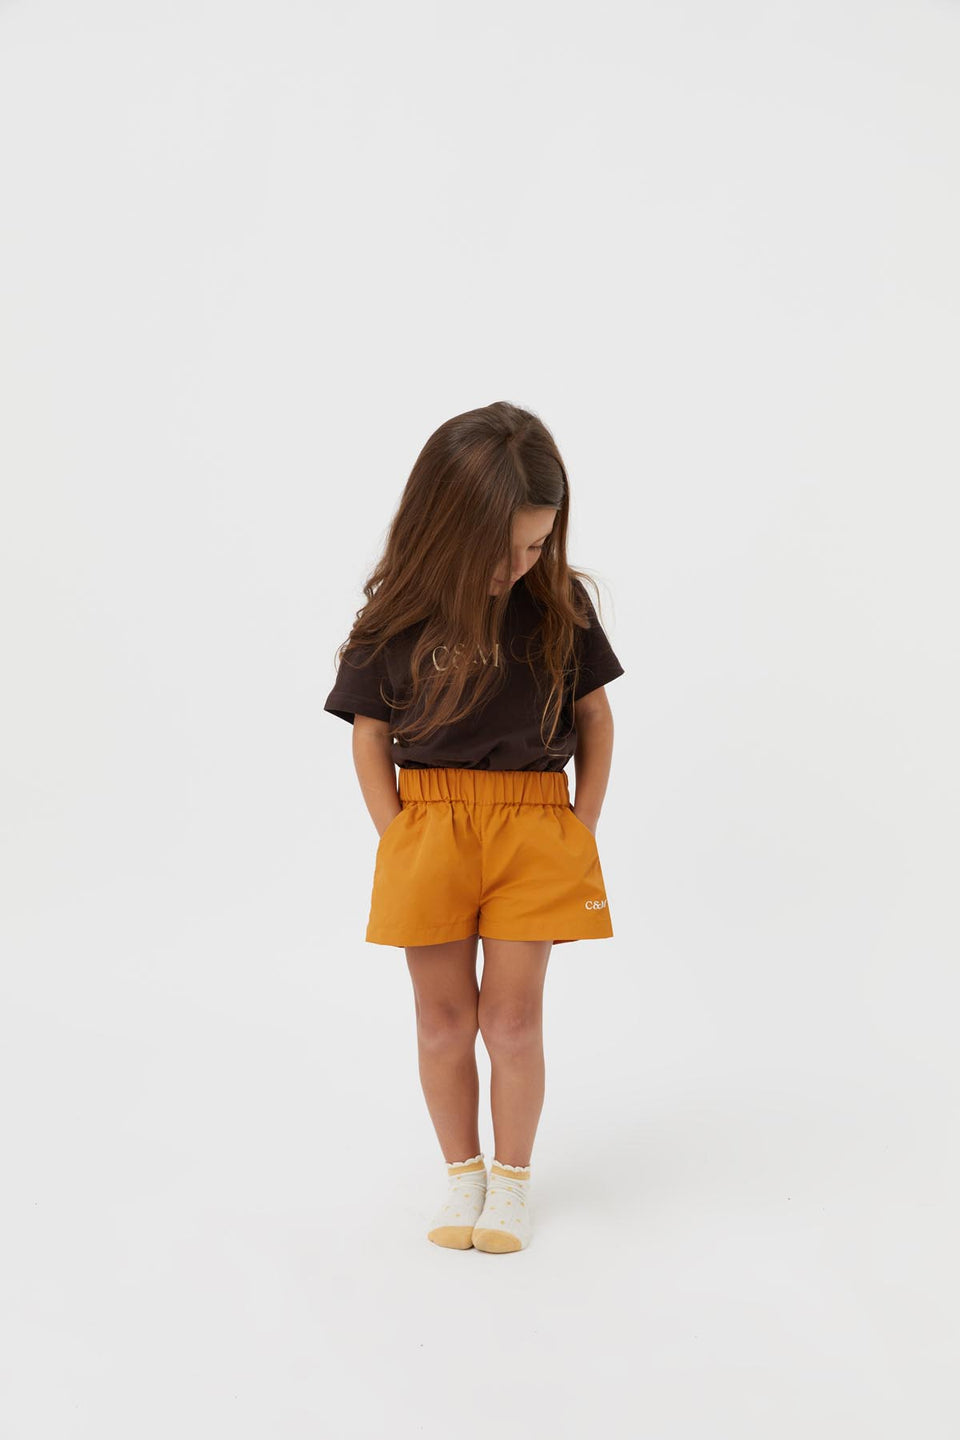 Kids Clothing | Tees, Pants & more | CAMILLA AND MARC